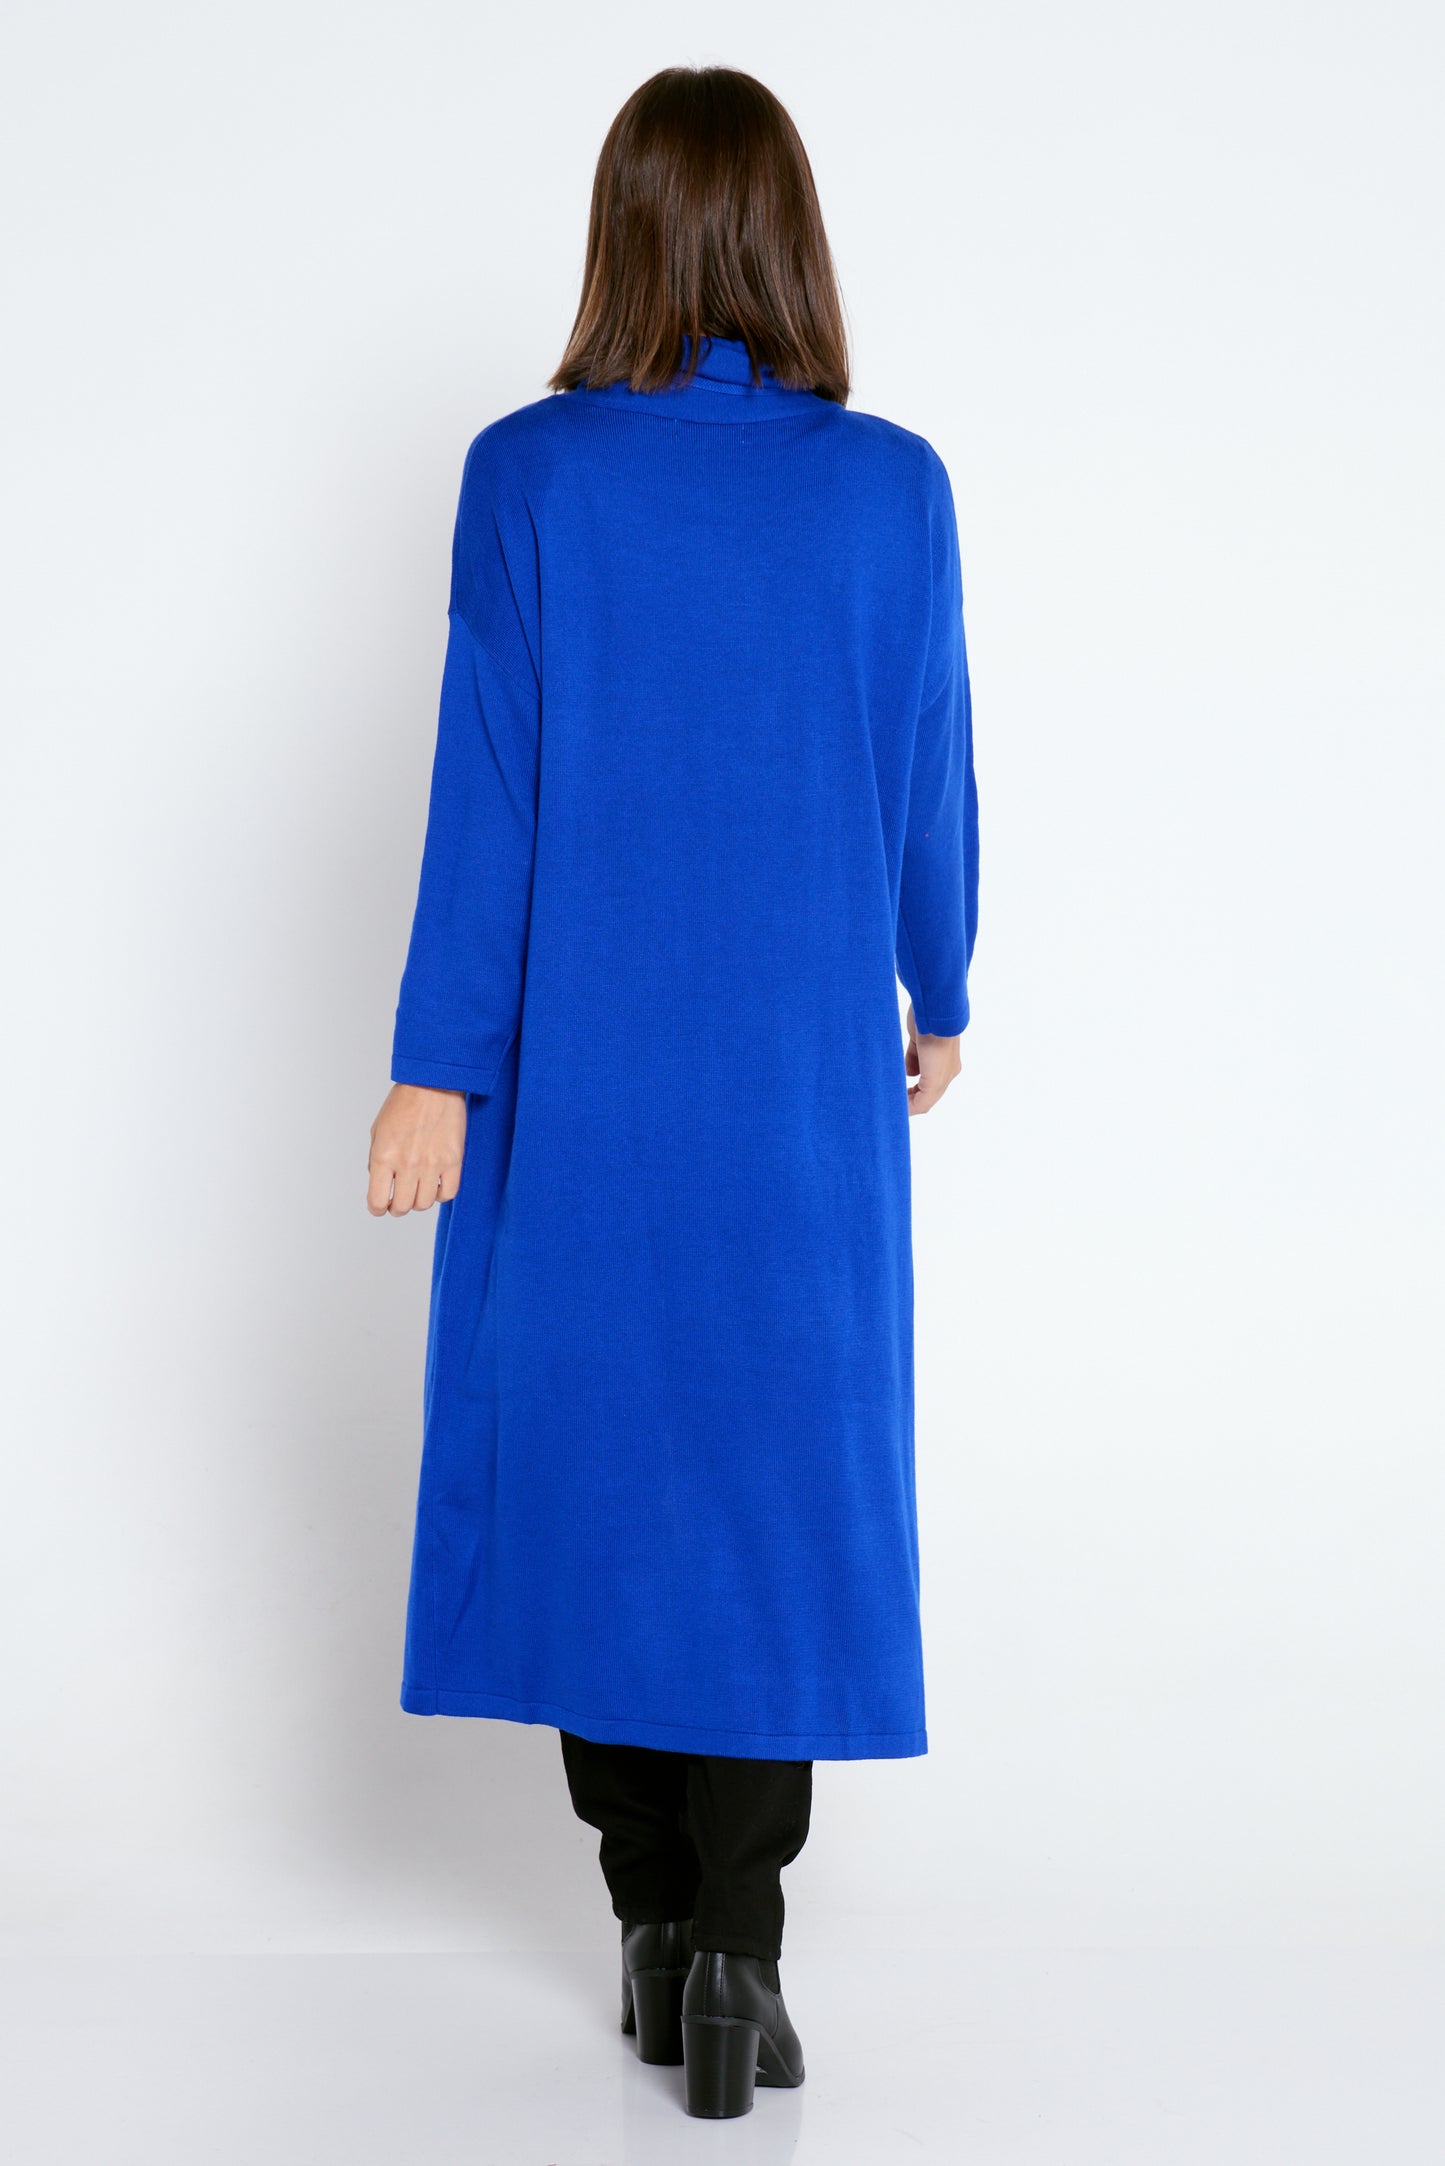 Kacela Knit Tunic - Royal Blue